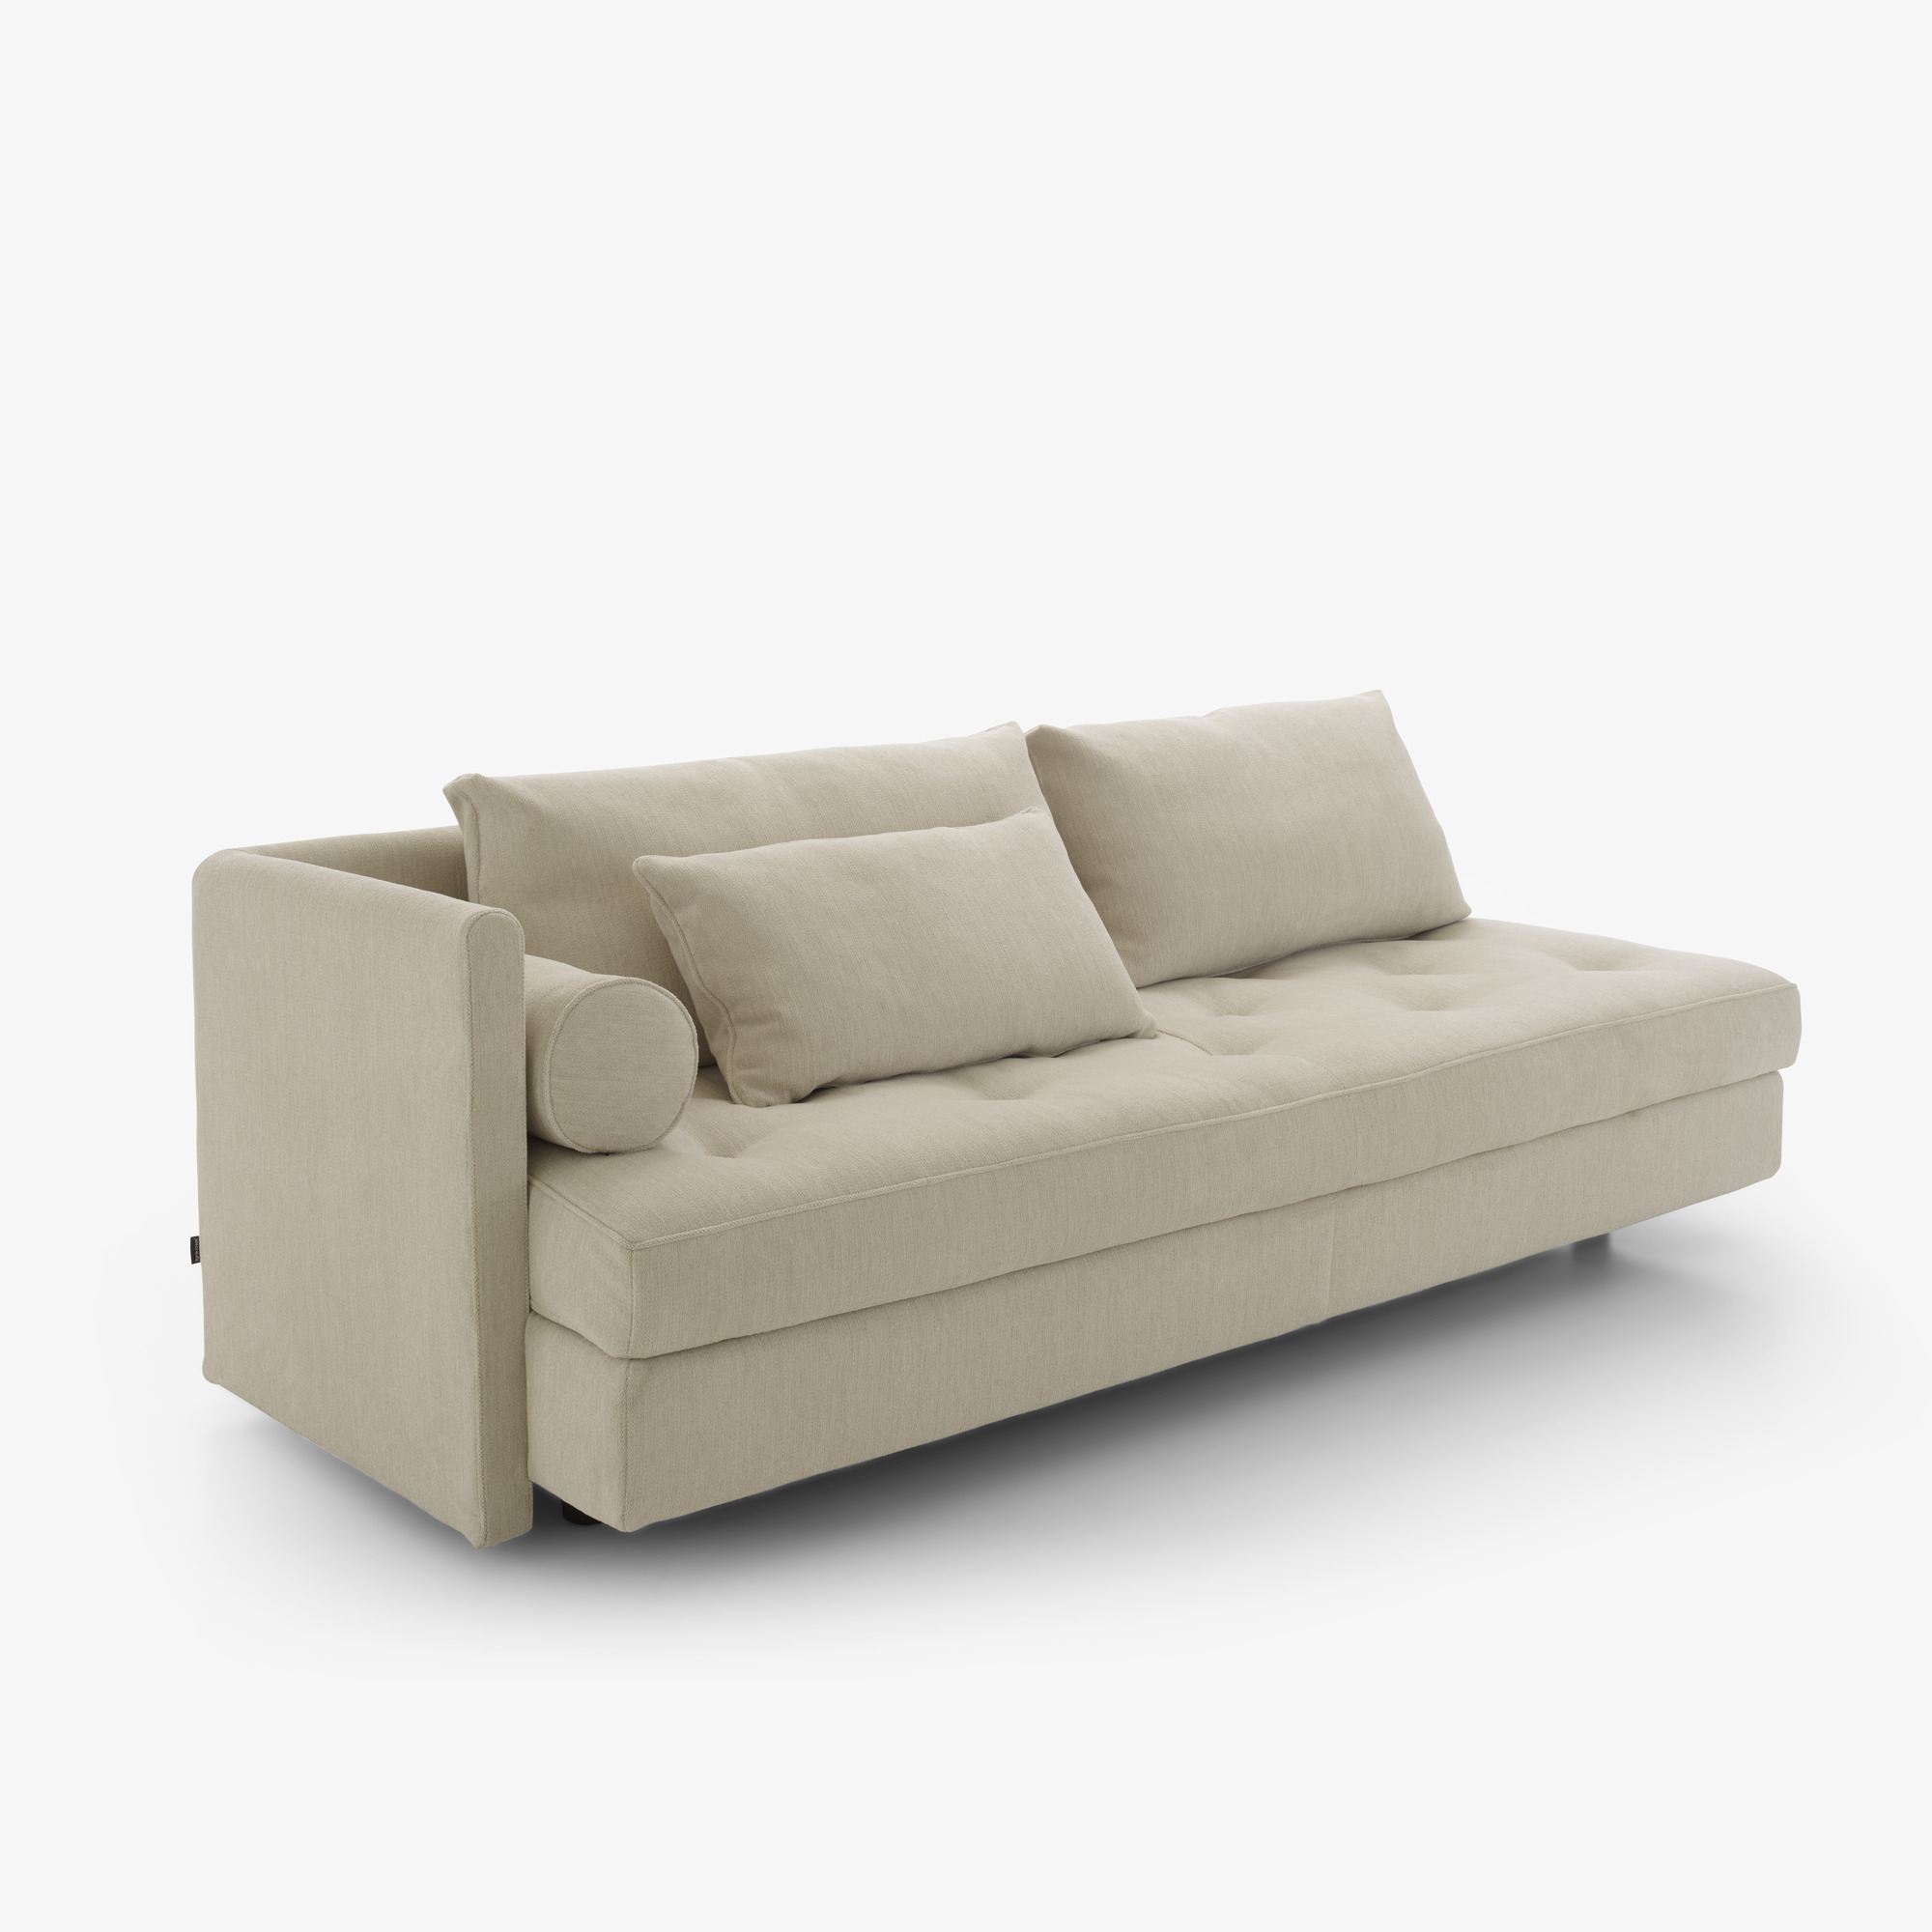 Image 1-arm sofa 2